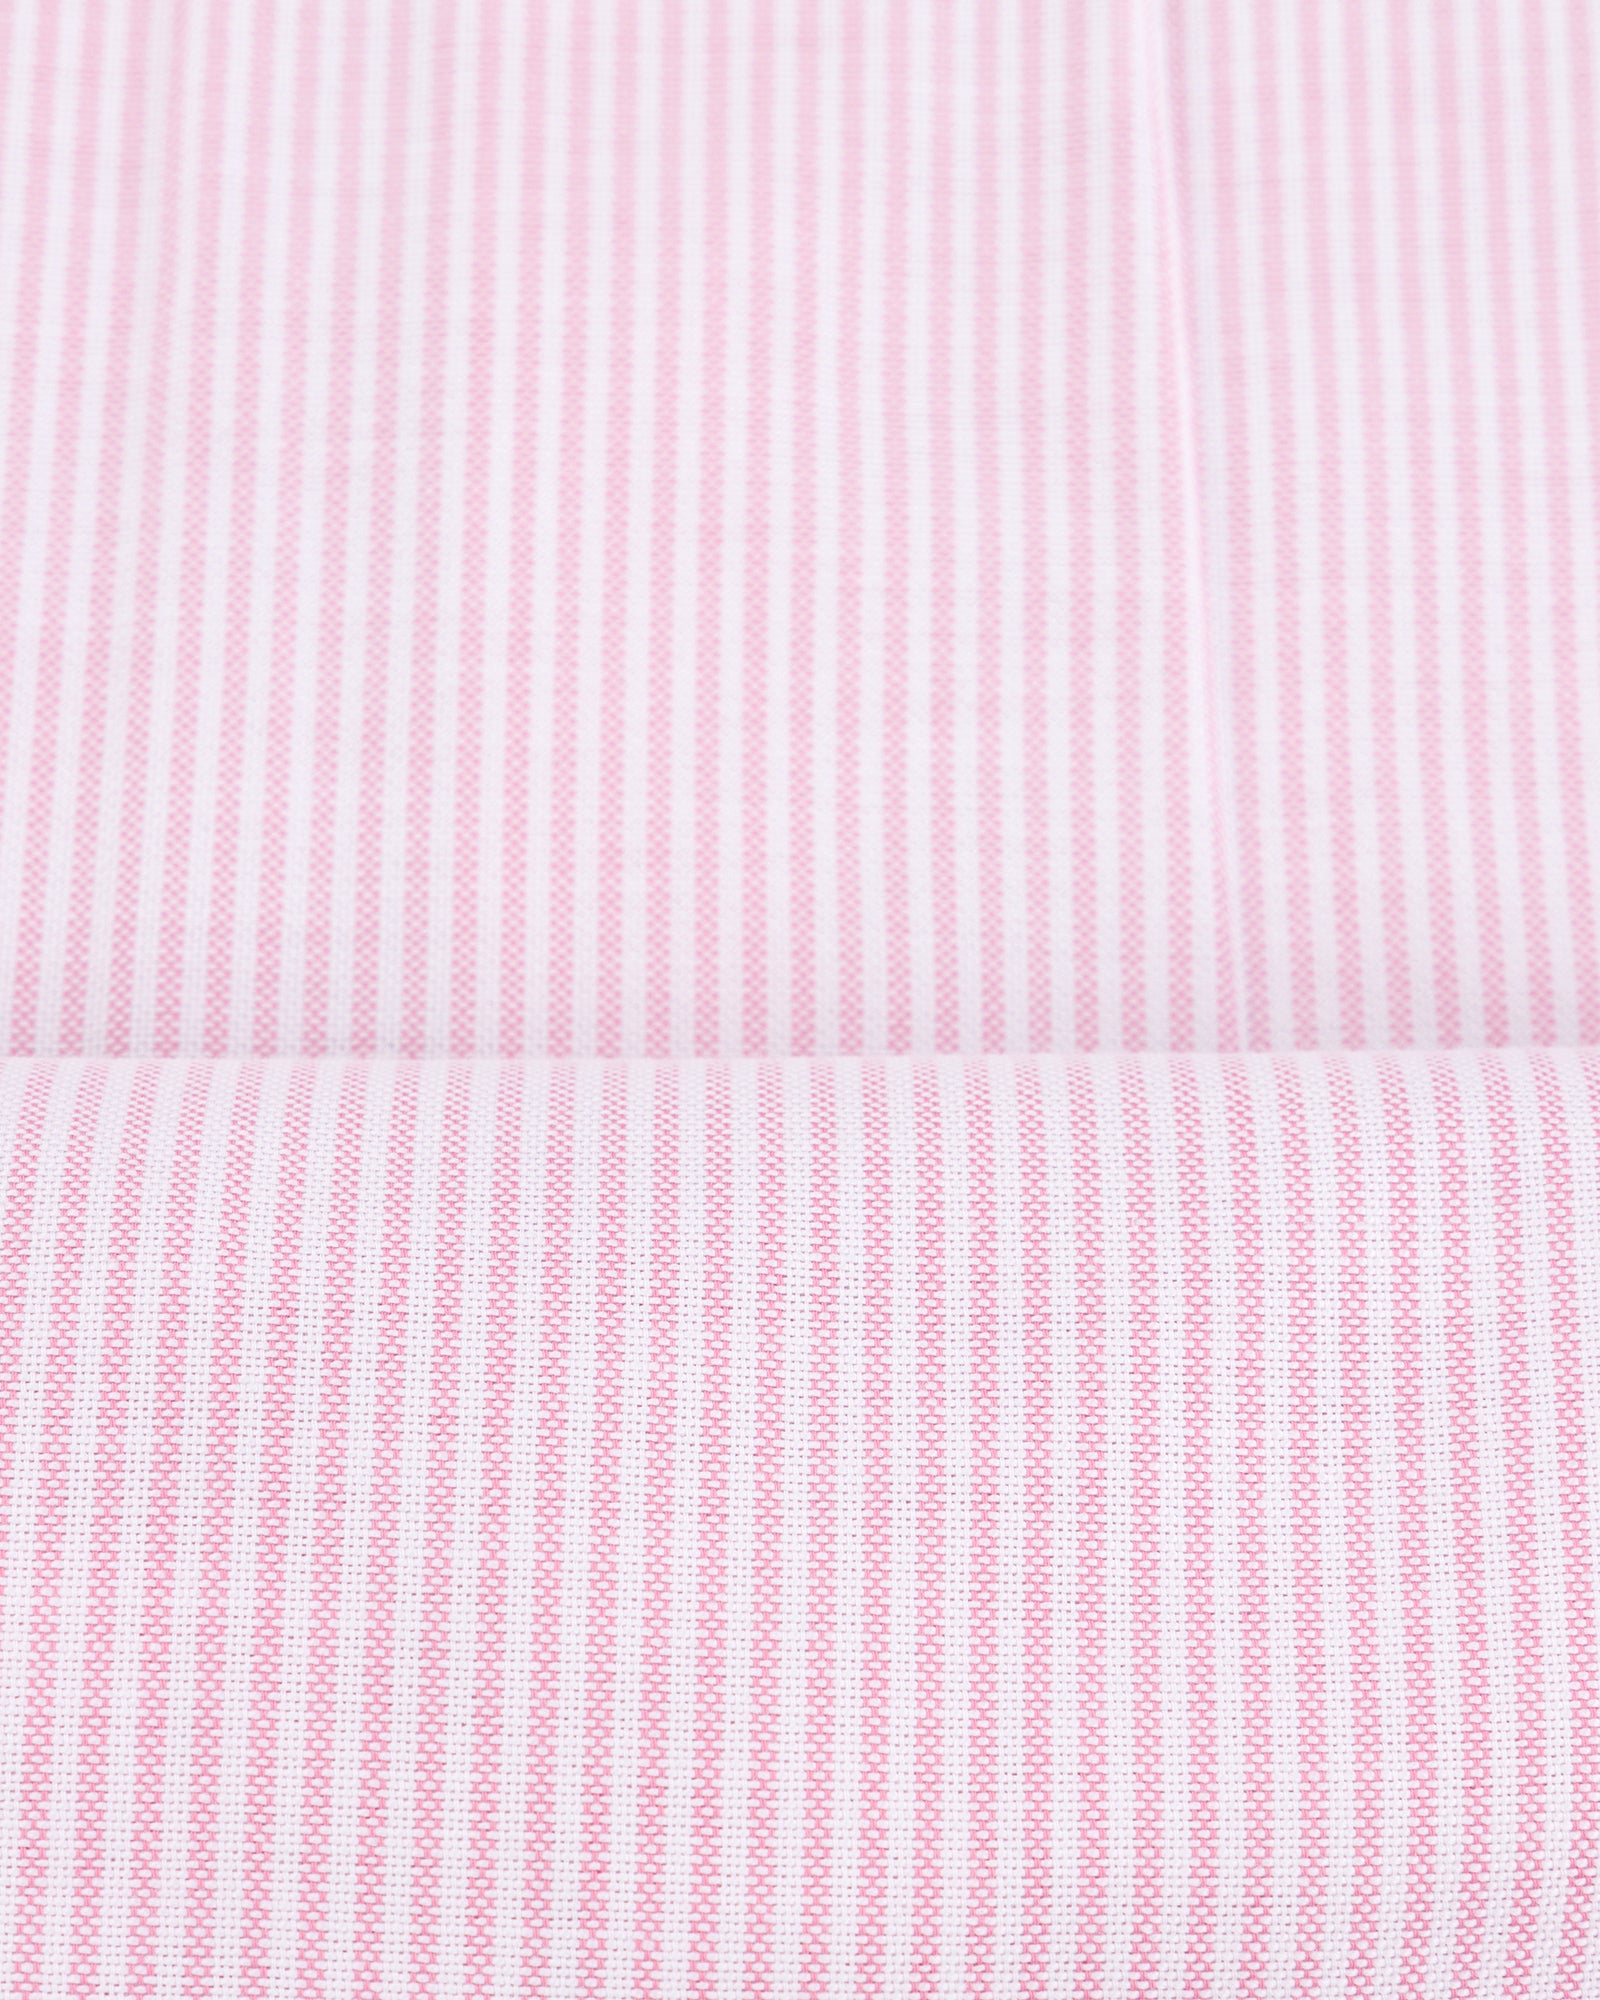 Button Down Collar Shirt - Pink Stripe Oxford Cotton